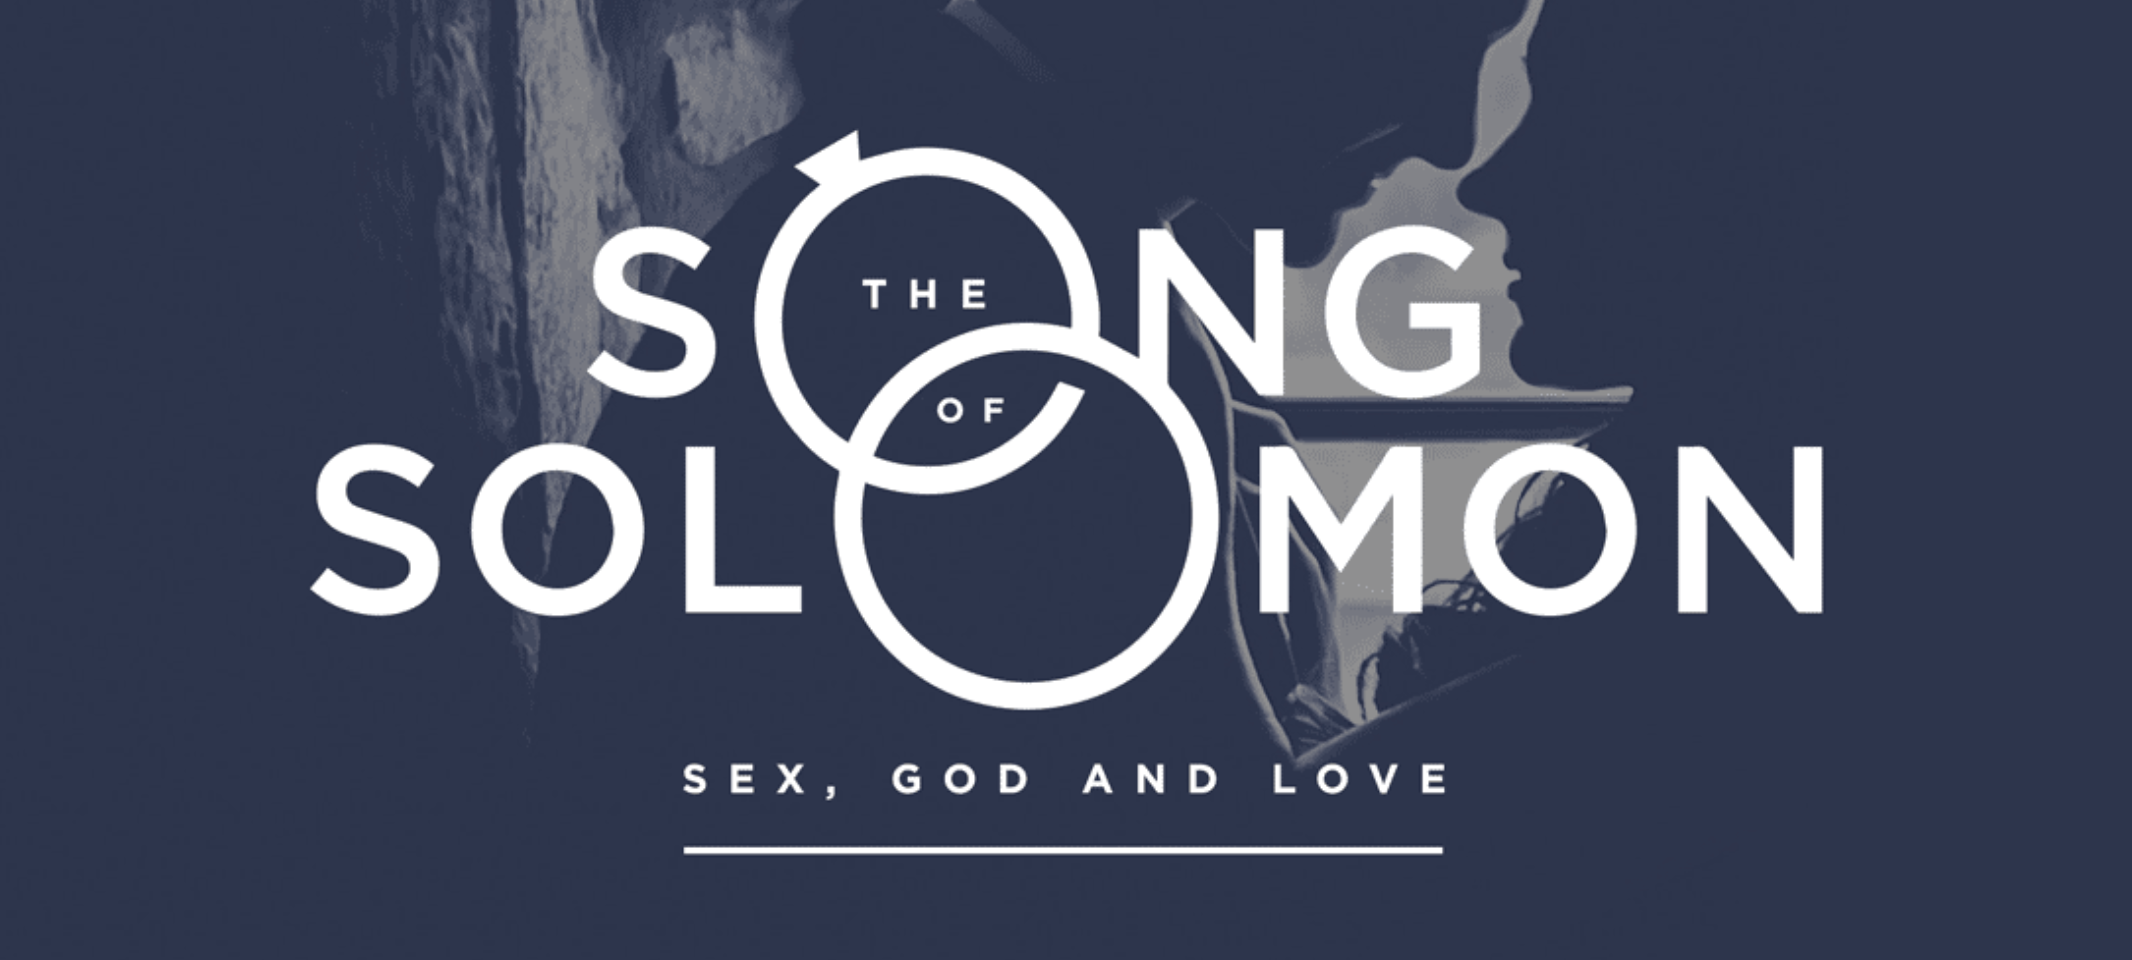 Song of Solomon Part 3